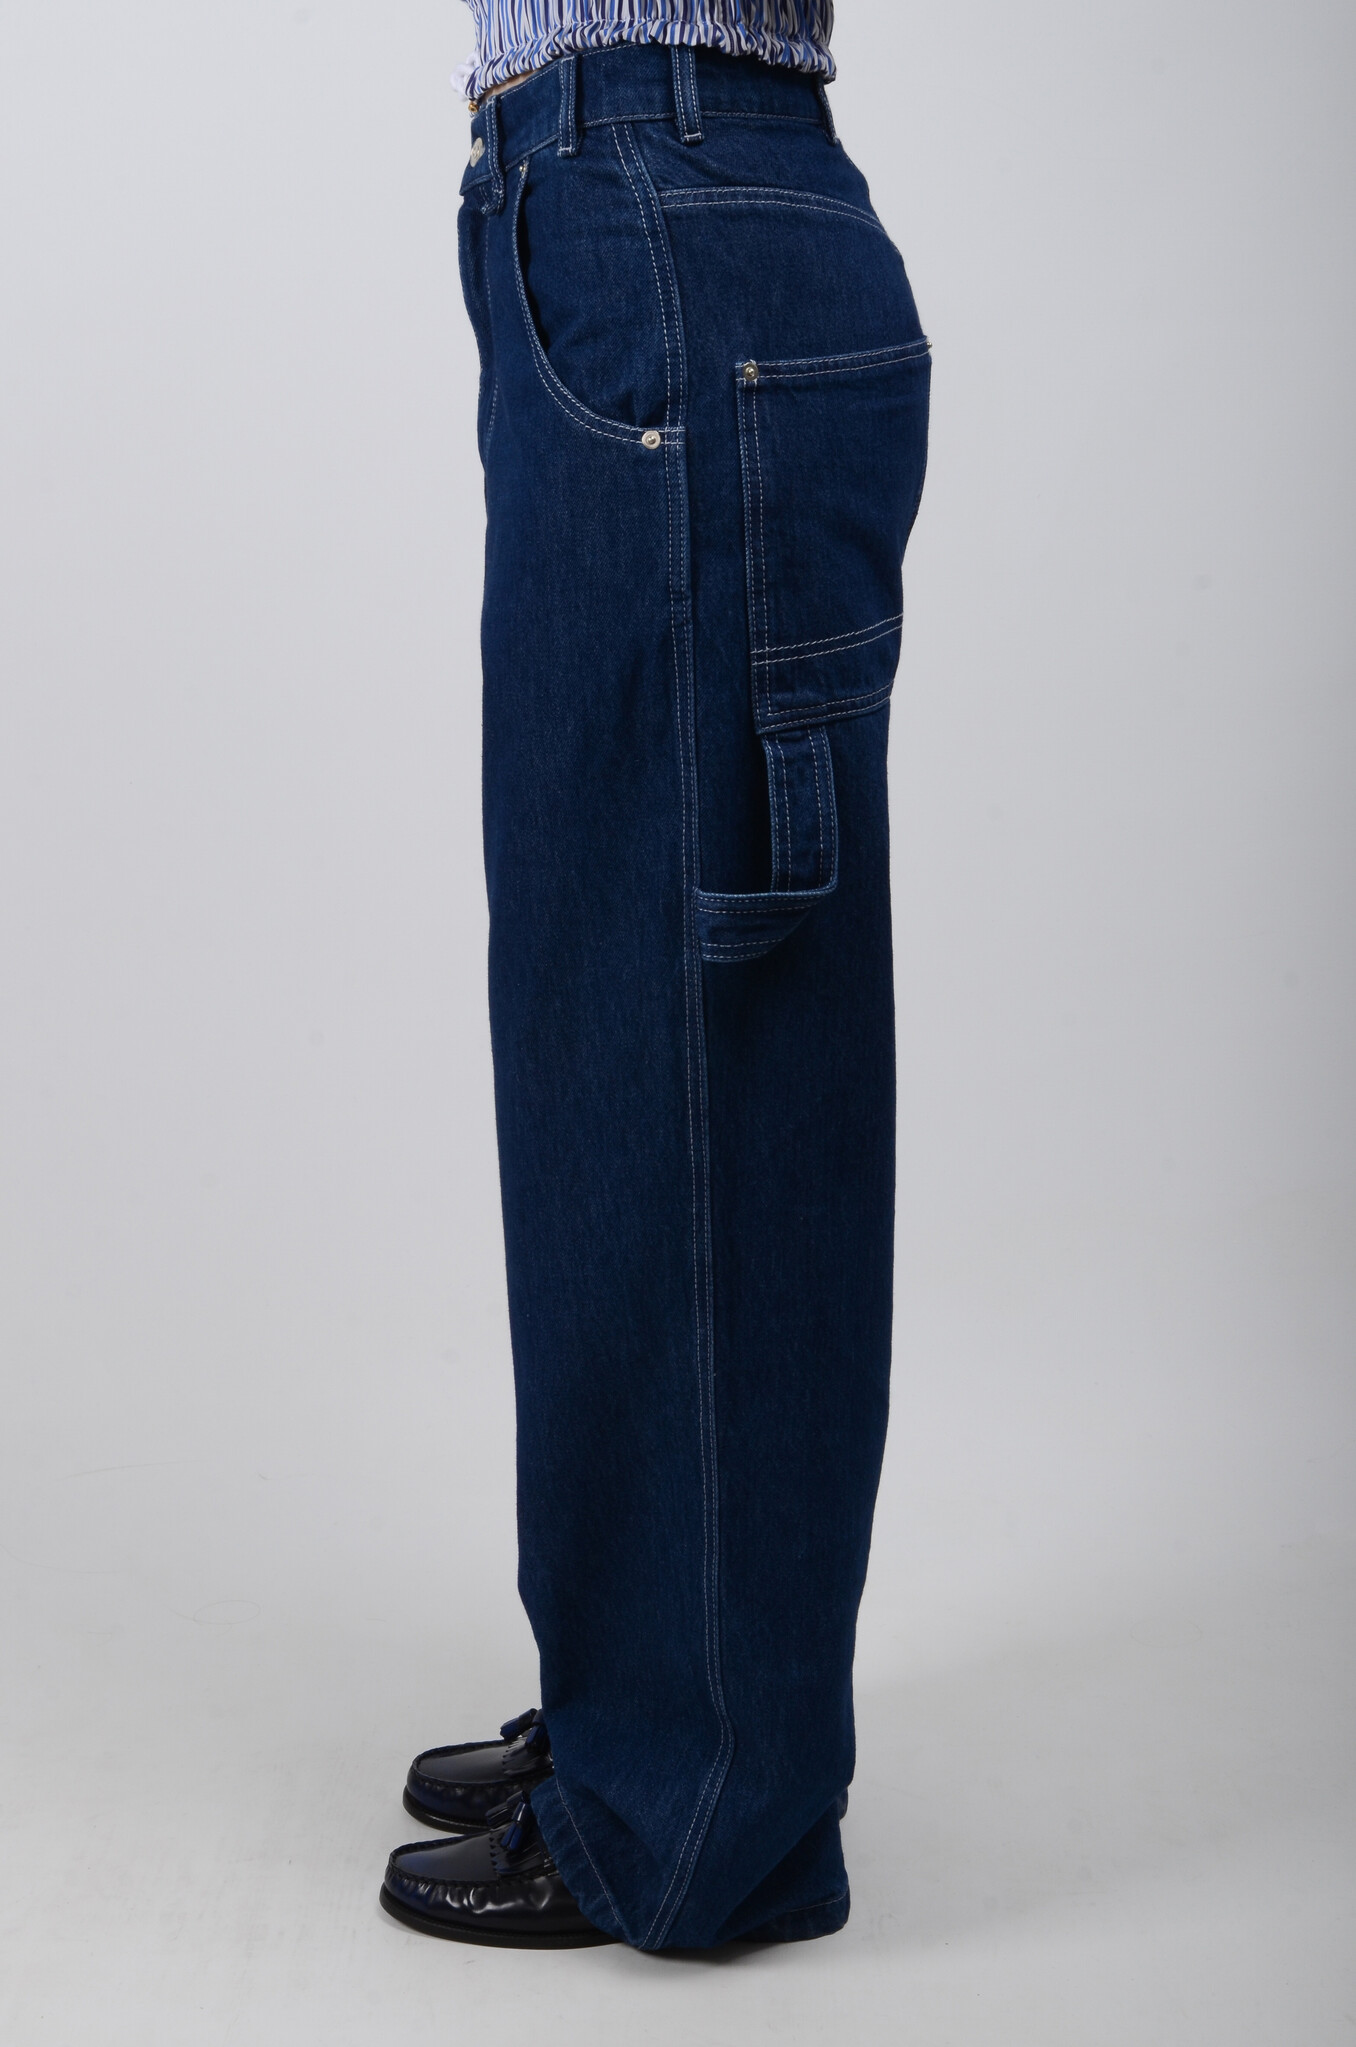 PXL Carpenter Pants in Blue-4